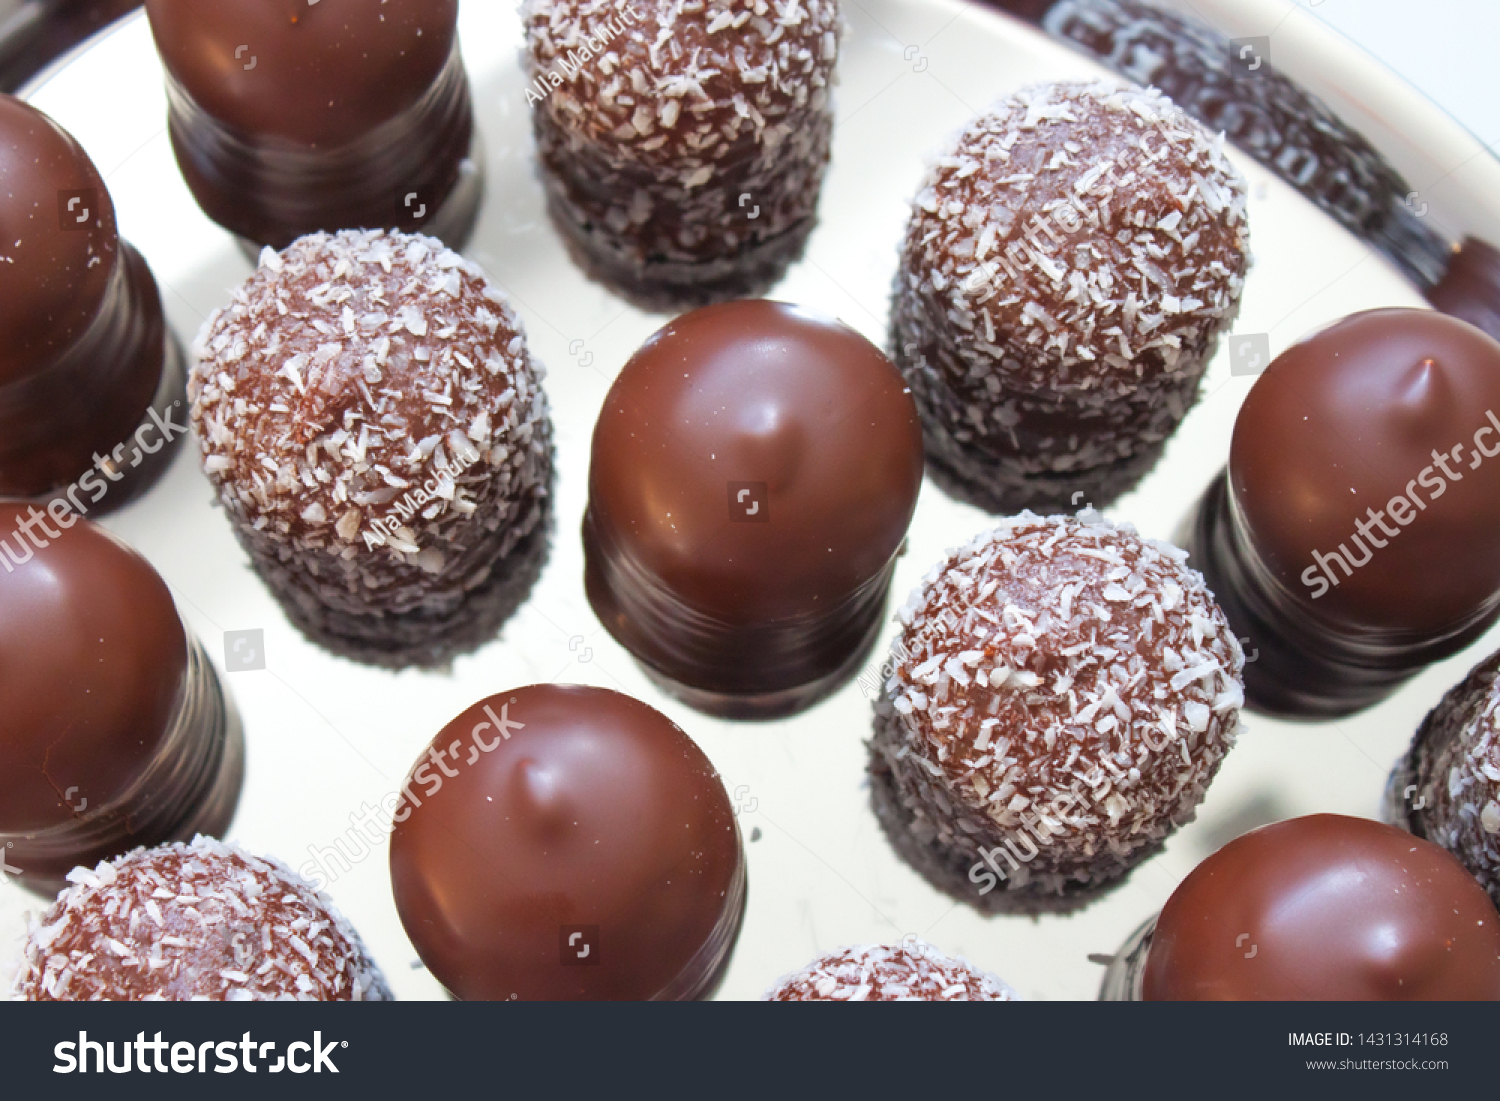 swedish dark chocolate